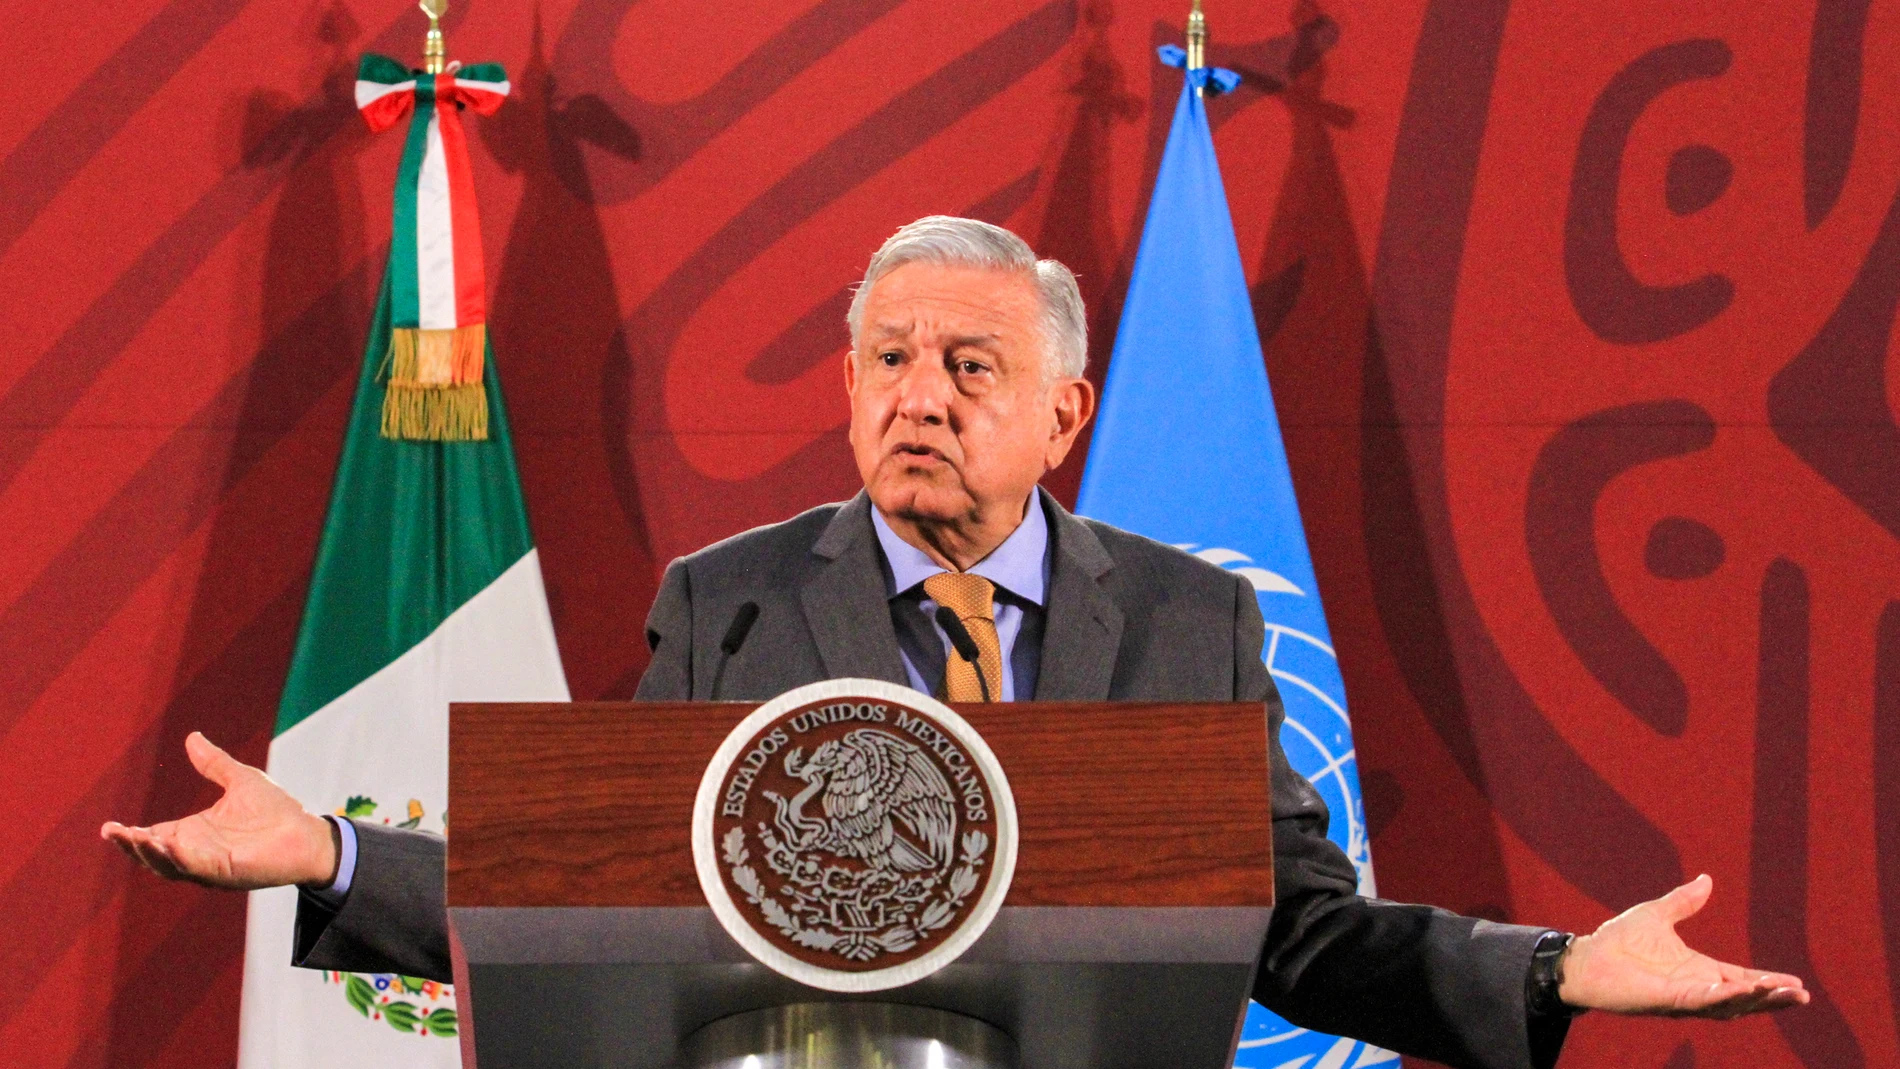 Mexican President Obrador press conference in Mexico